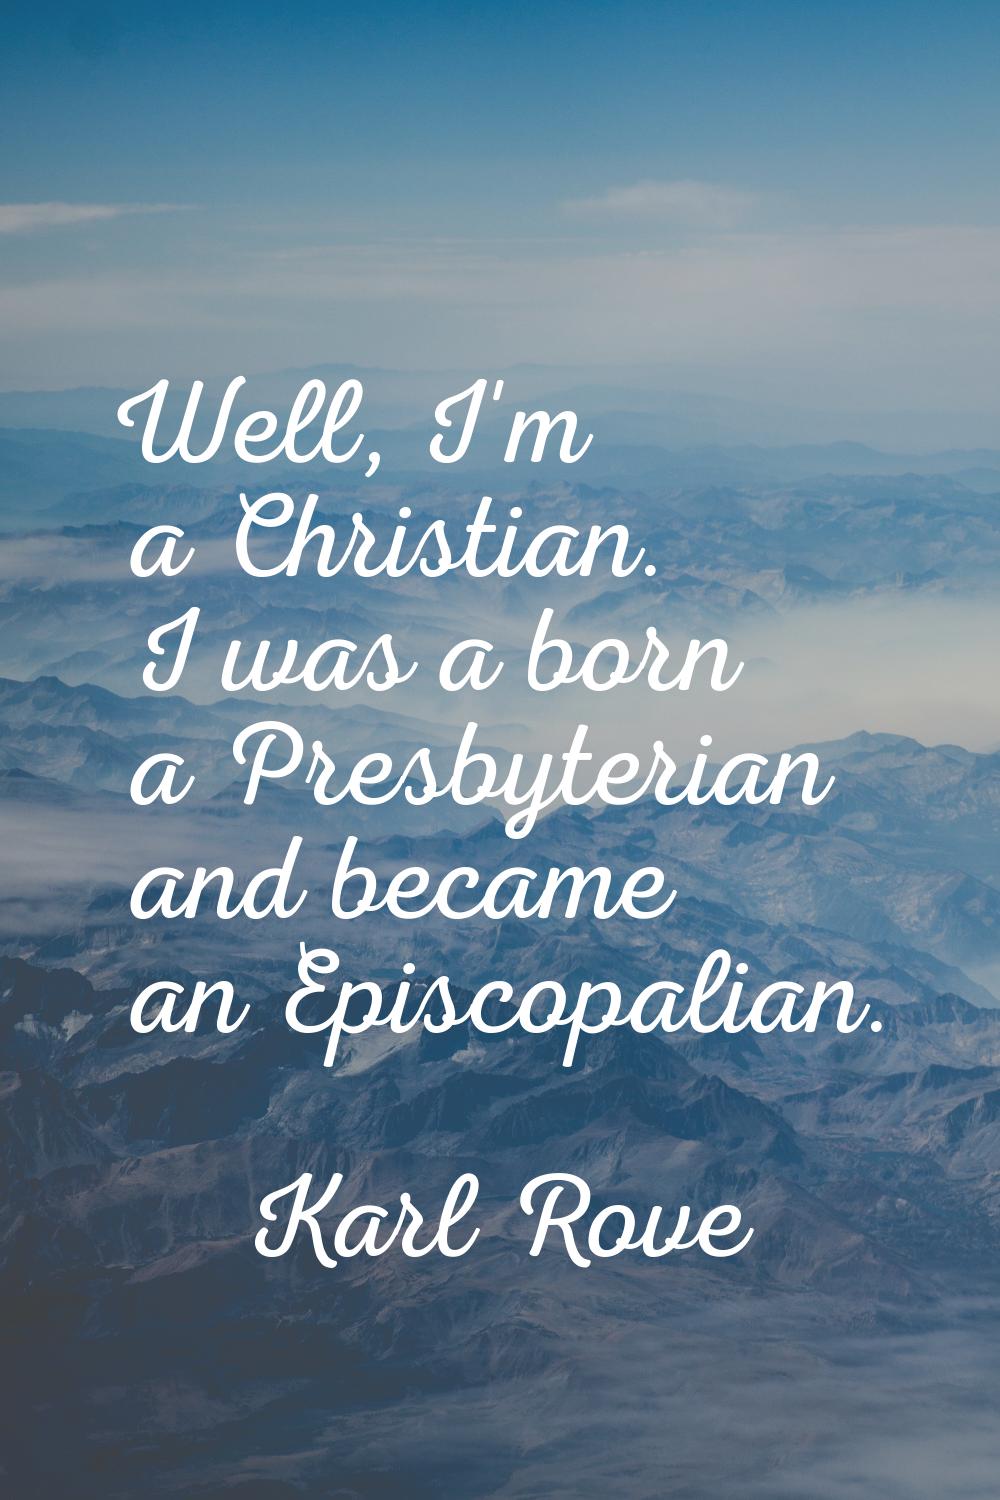 Well, I'm a Christian. I was a born a Presbyterian and became an Episcopalian.